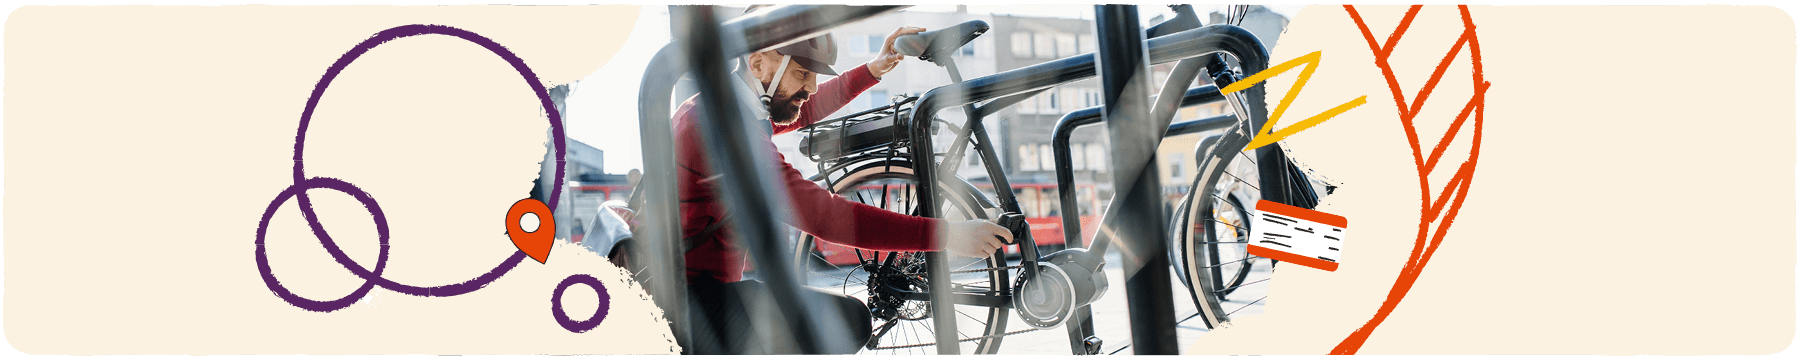 Passenger securing bike at a train station